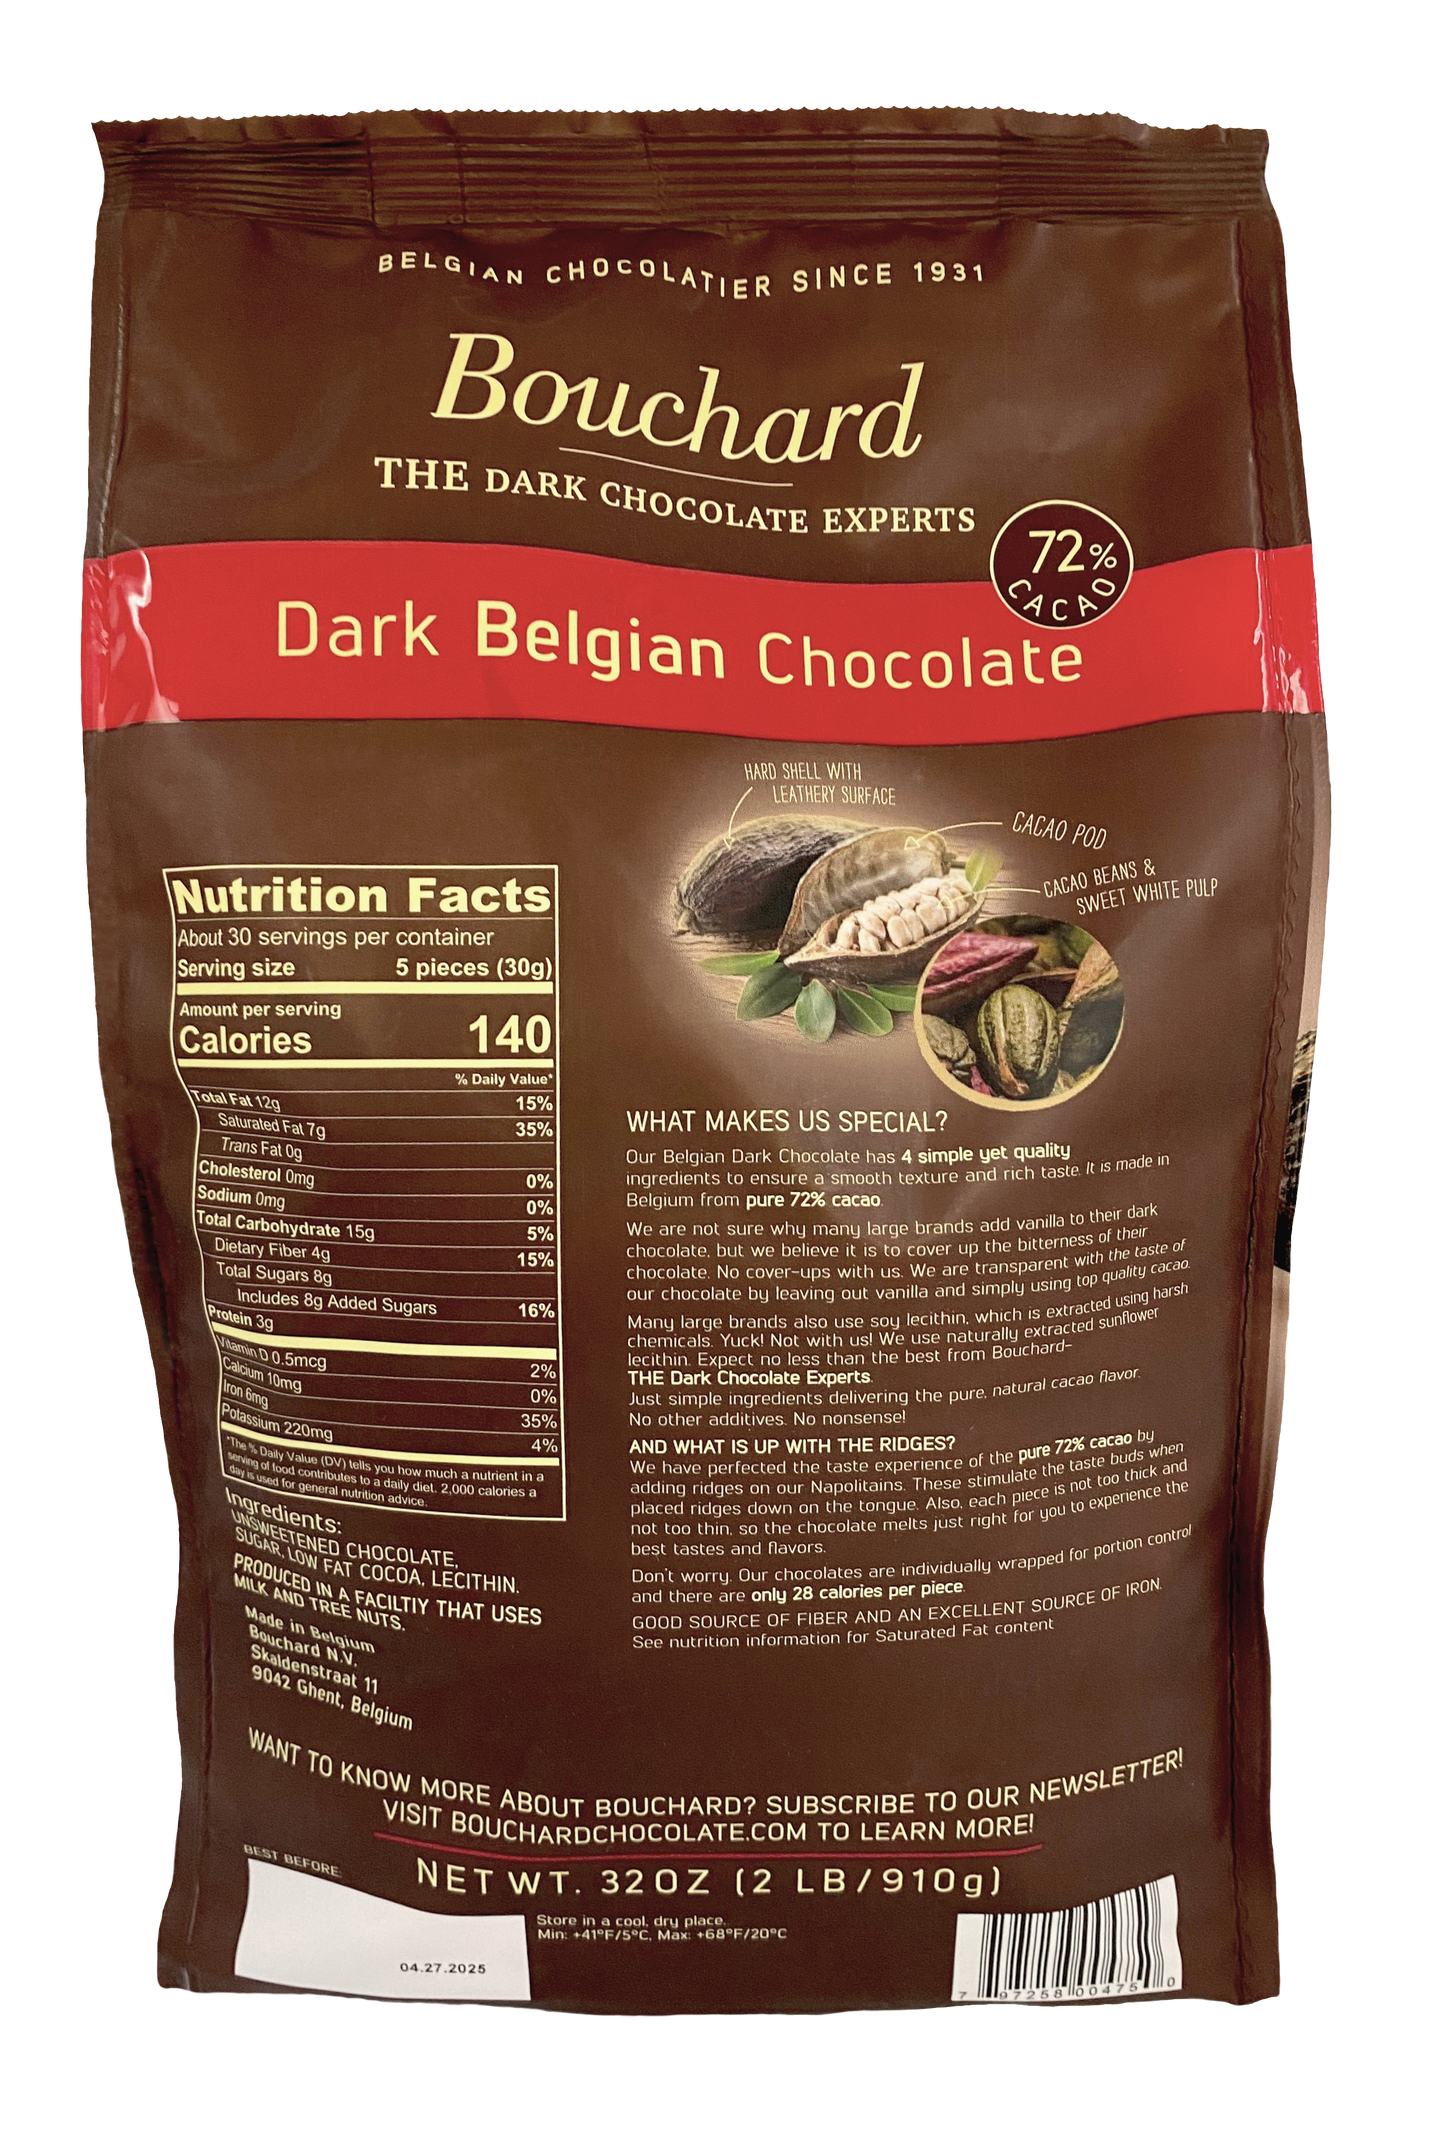 NEW 2LB BAG - TEST PRODUCTION: Belgian 72% Dark Chocolate Napolitains